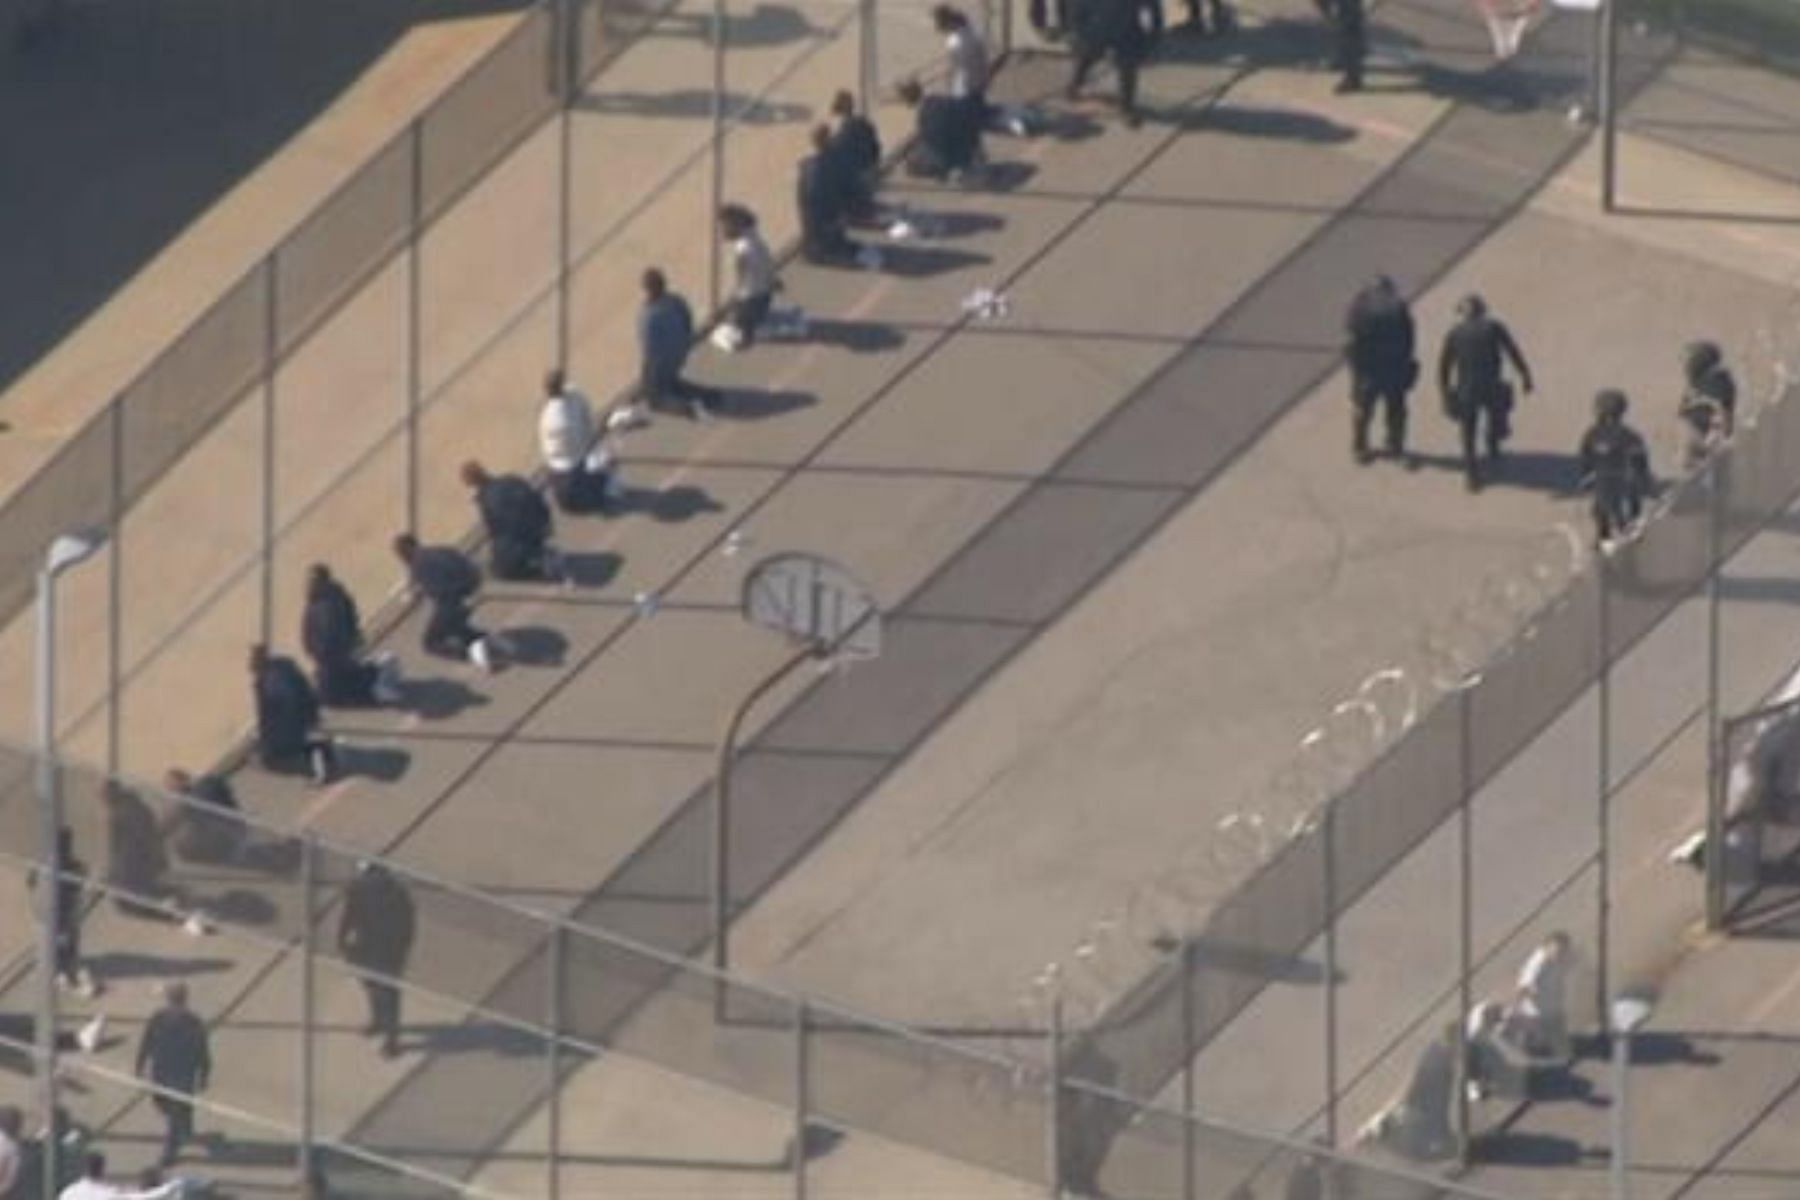 Inmates were detained outside (Image via SkyEye)